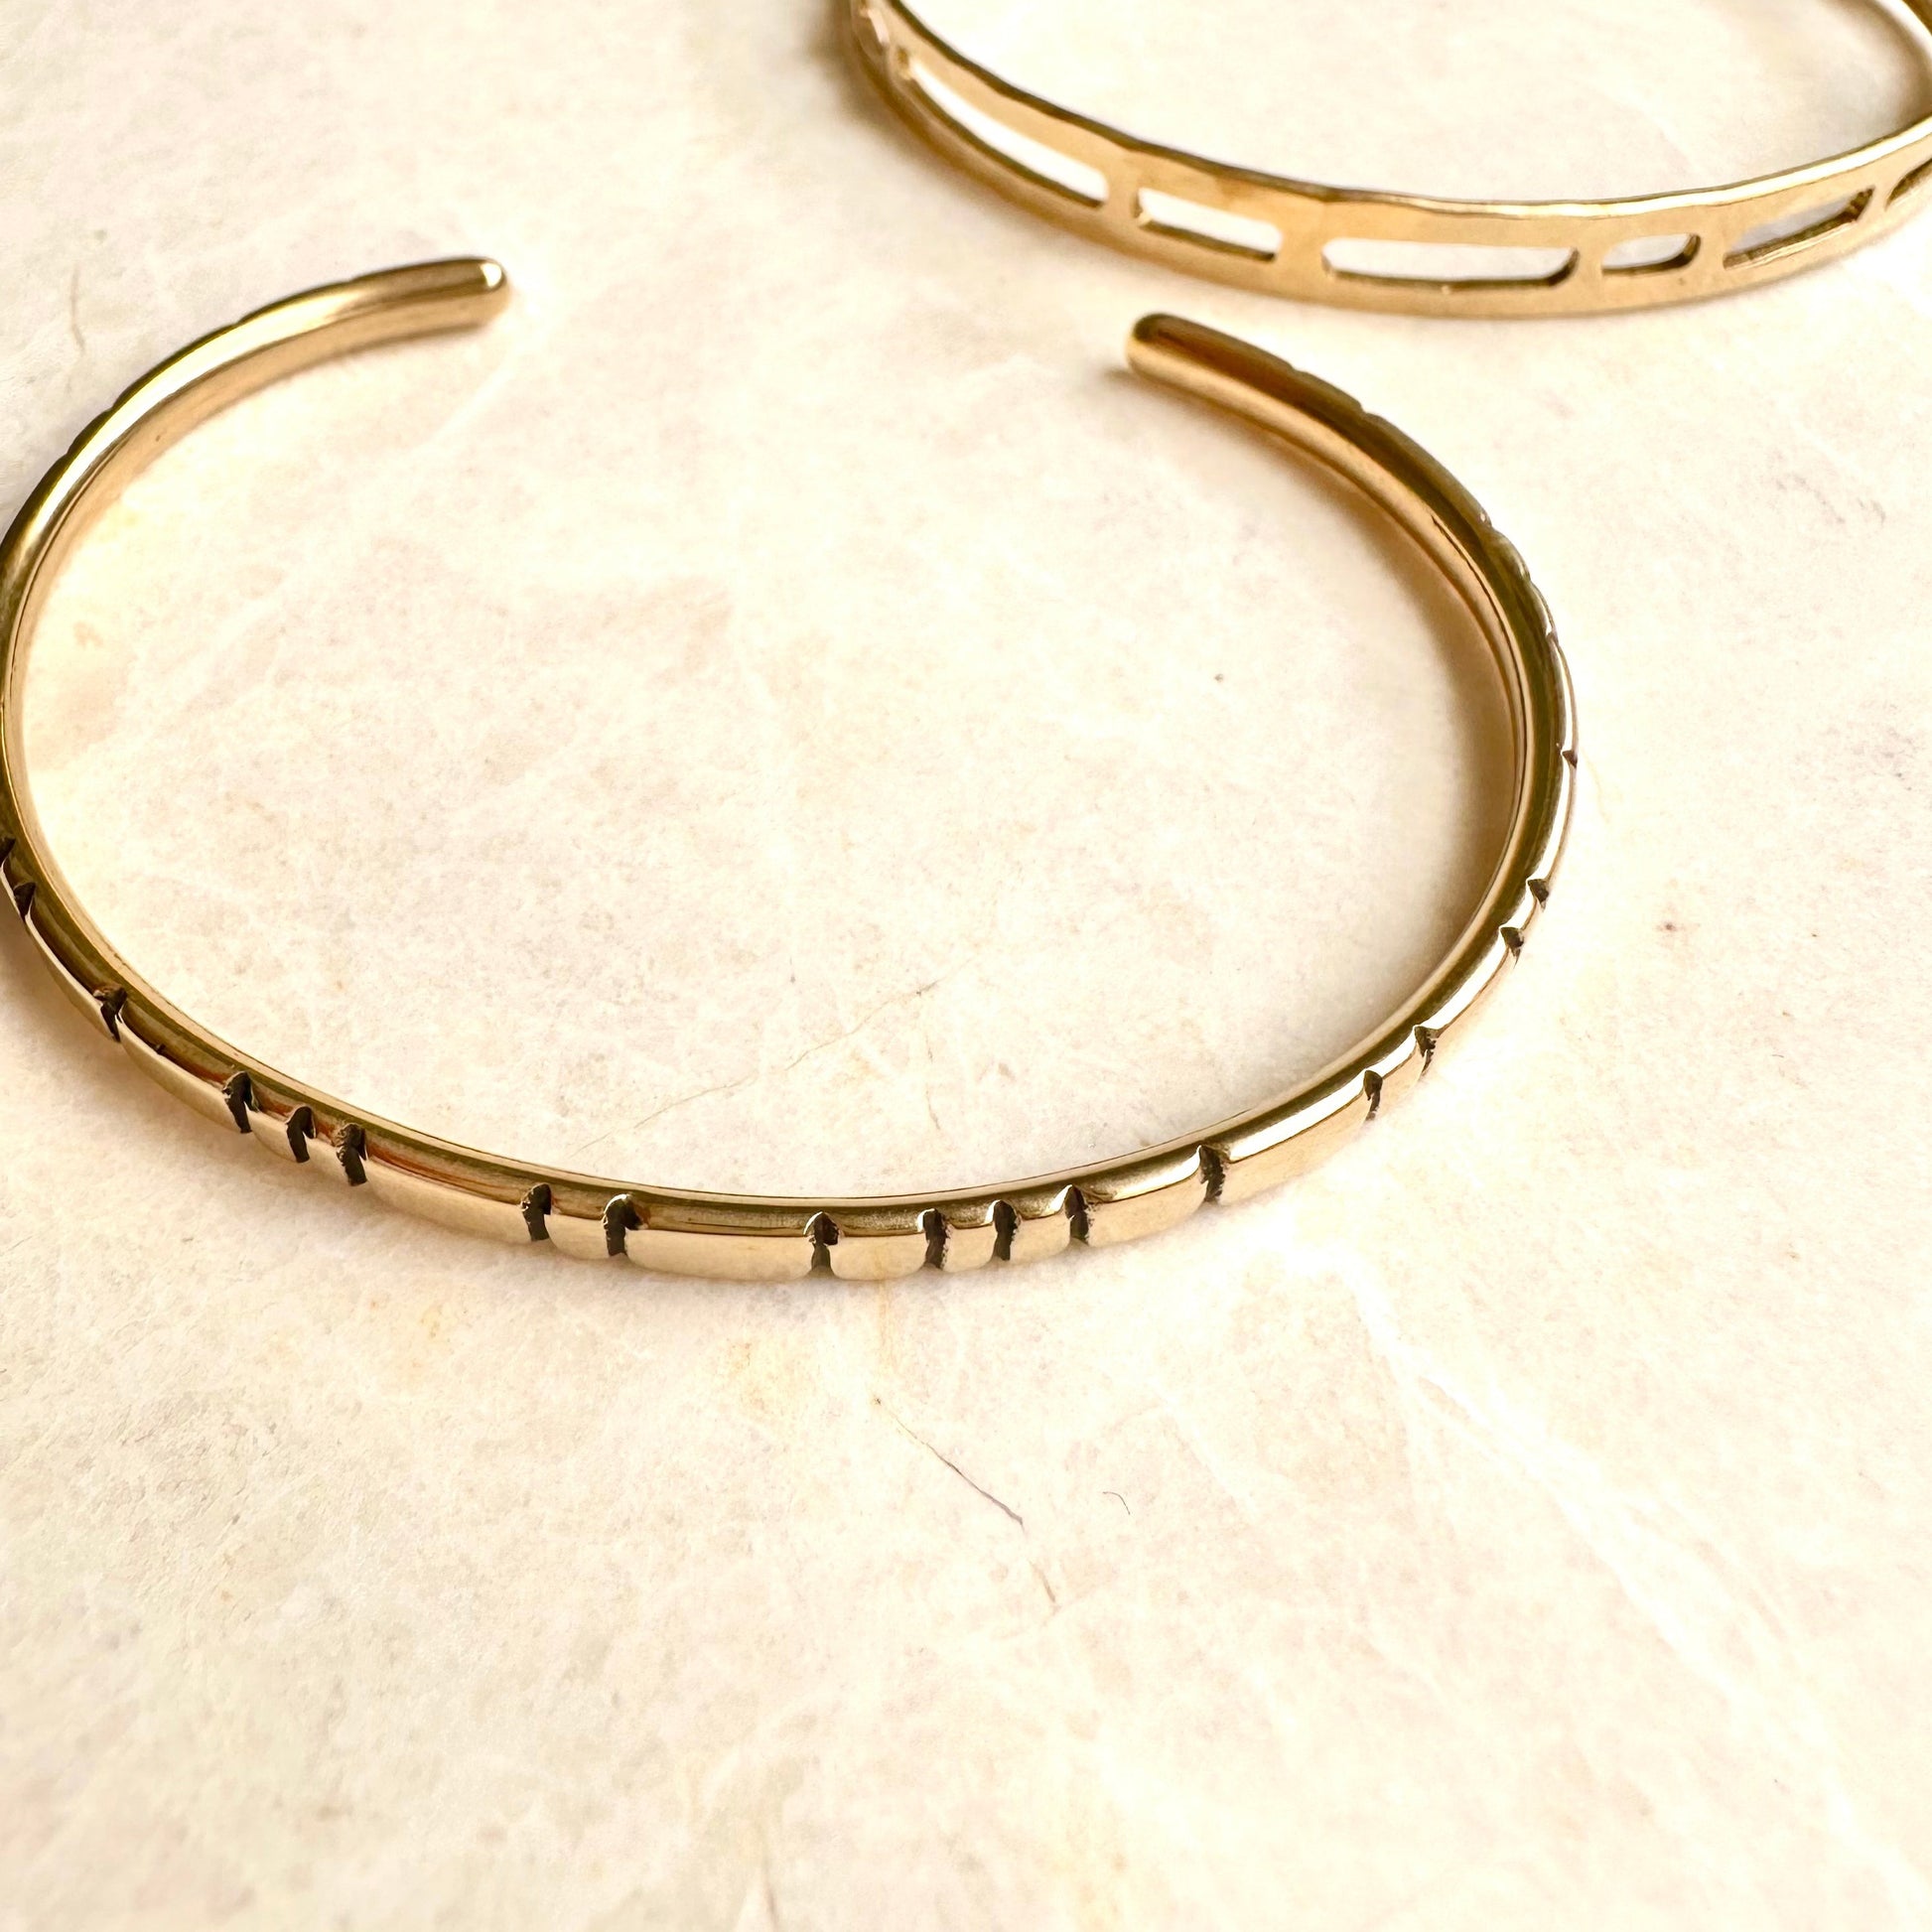 Handmade brass cuff bracelet with line details.